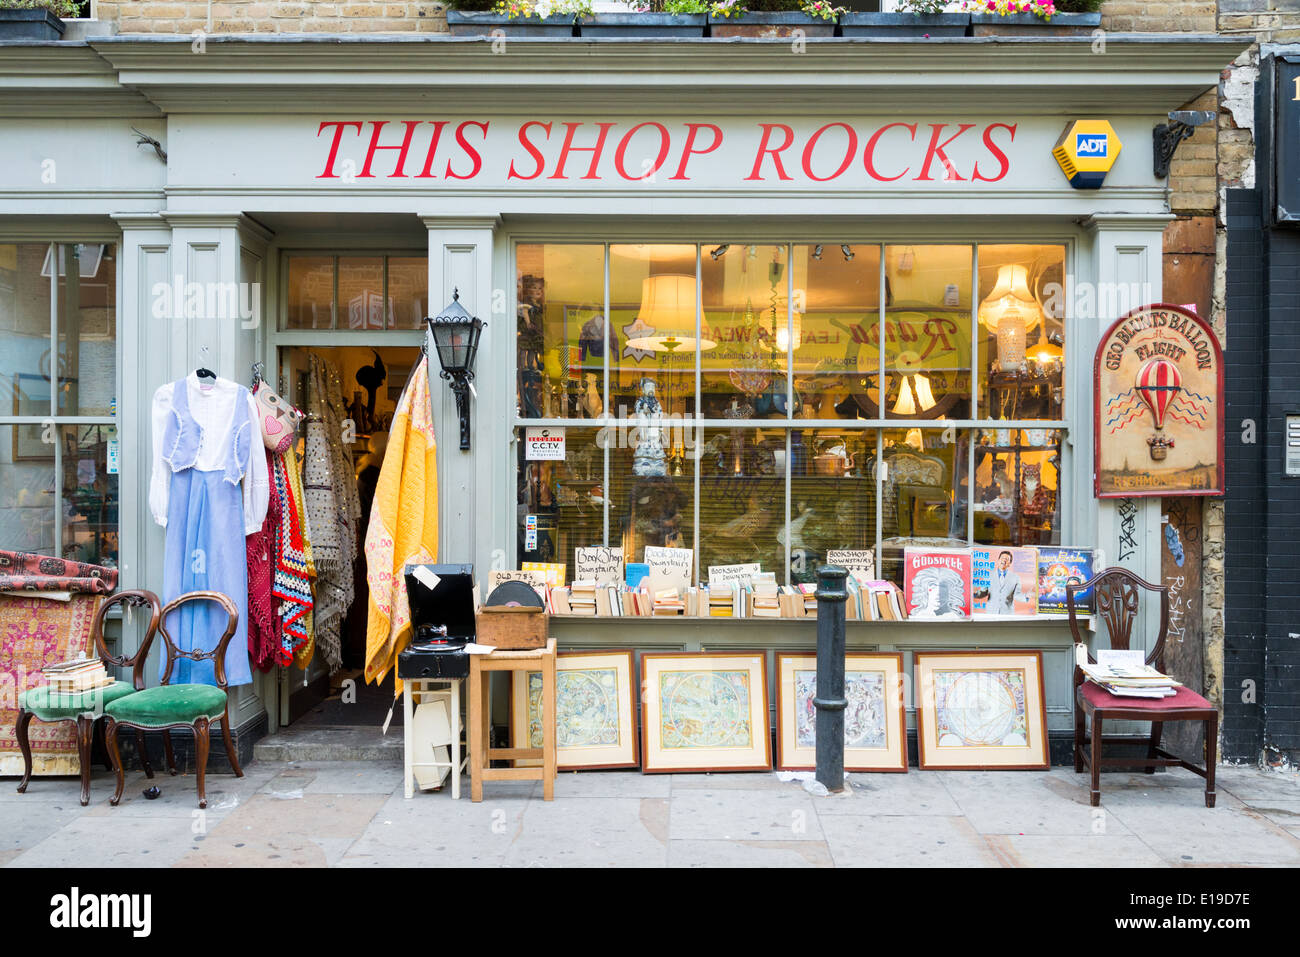 This Shop Rocks shopfront on Brick Lane, Tower Hamlets, London, England, UK Stock Photo